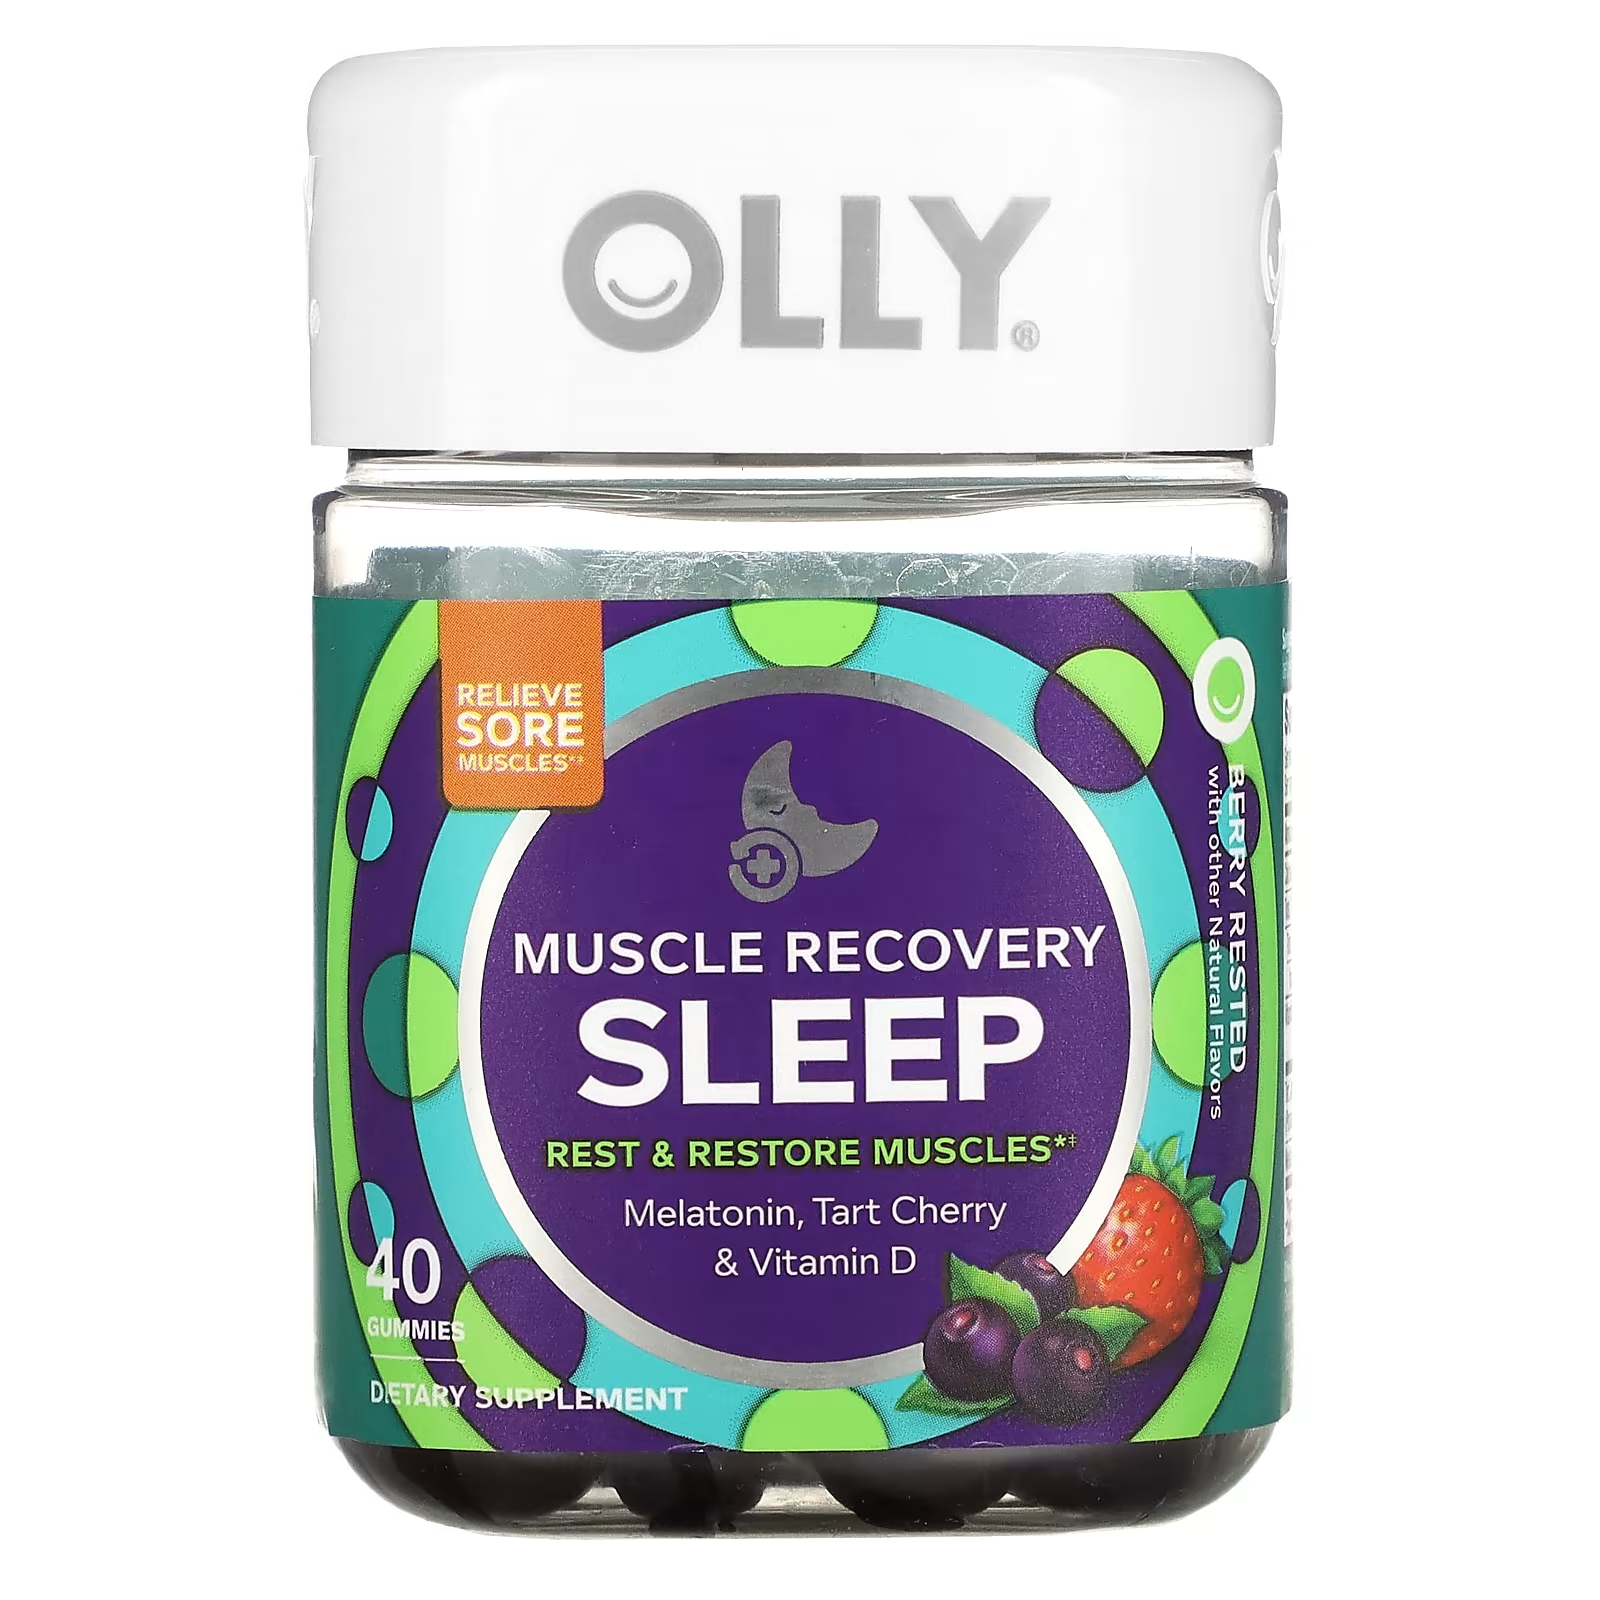 Пищевая добавка Olly Muscle Recovery Sleep Berry Rested, 40 жевательных конфет